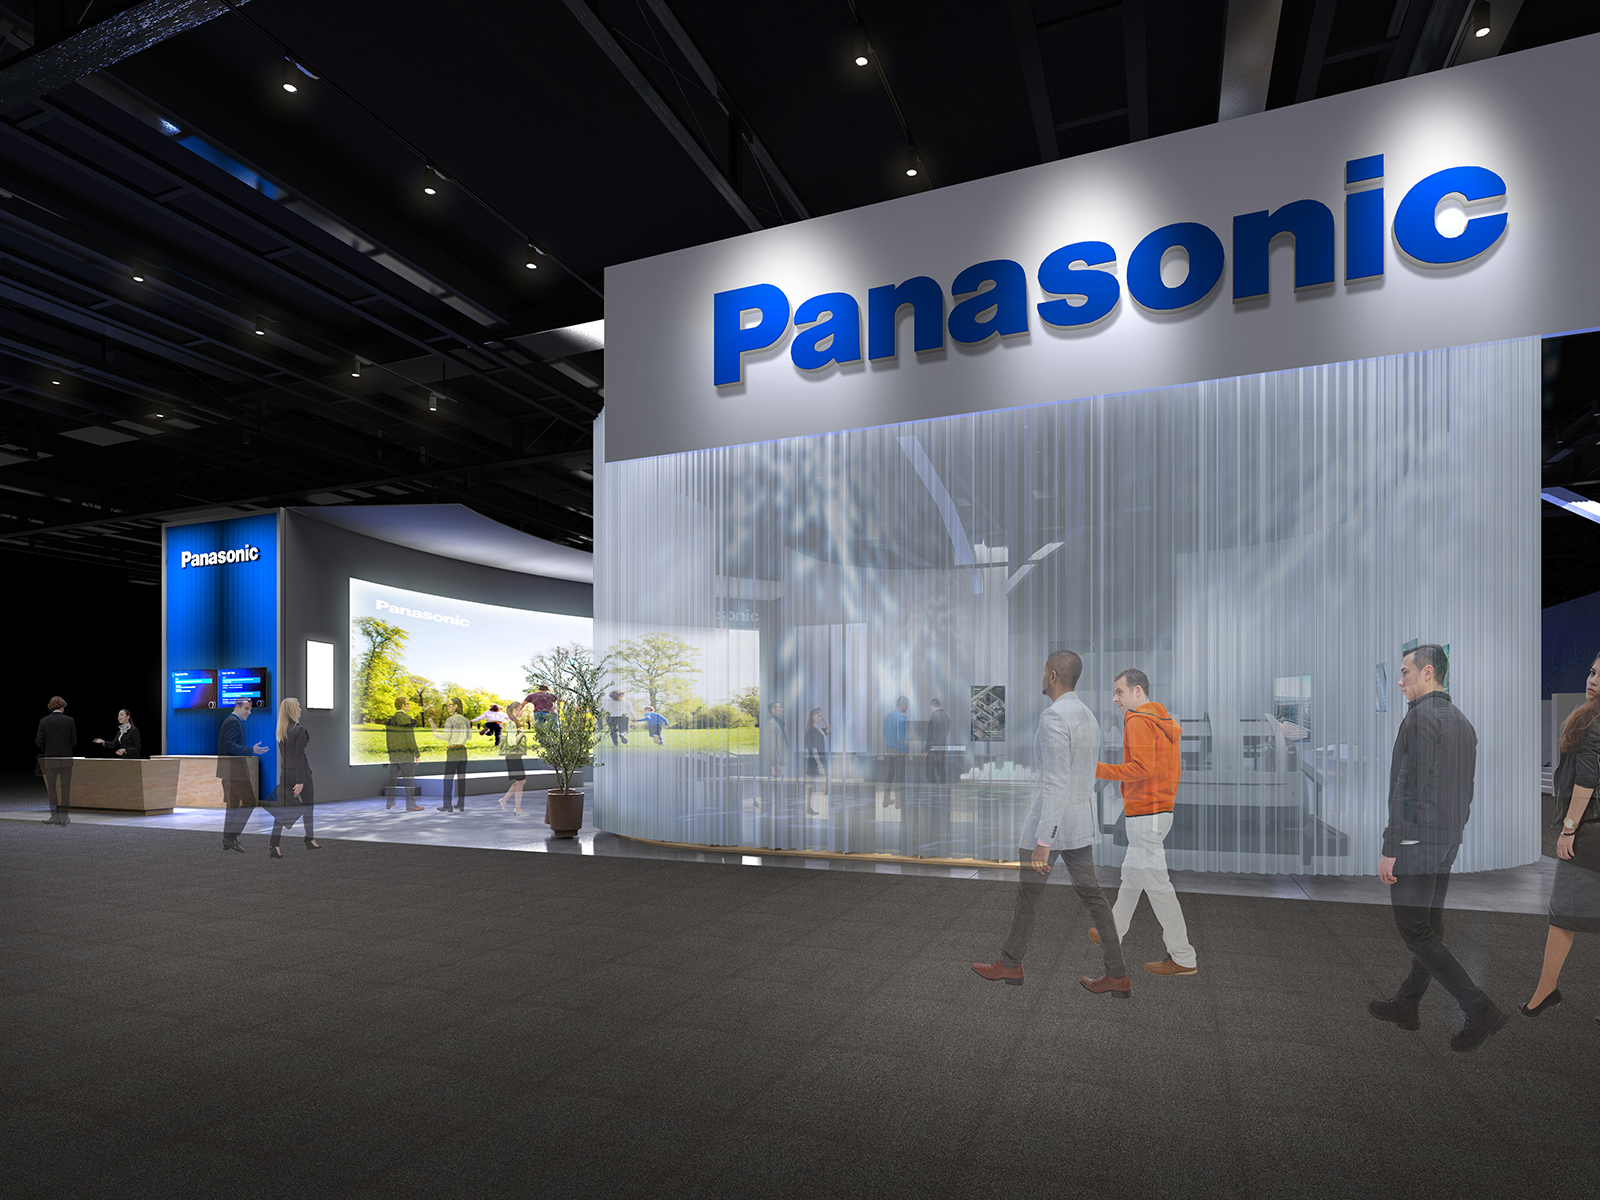 image: Entrance of Panasonic Booth